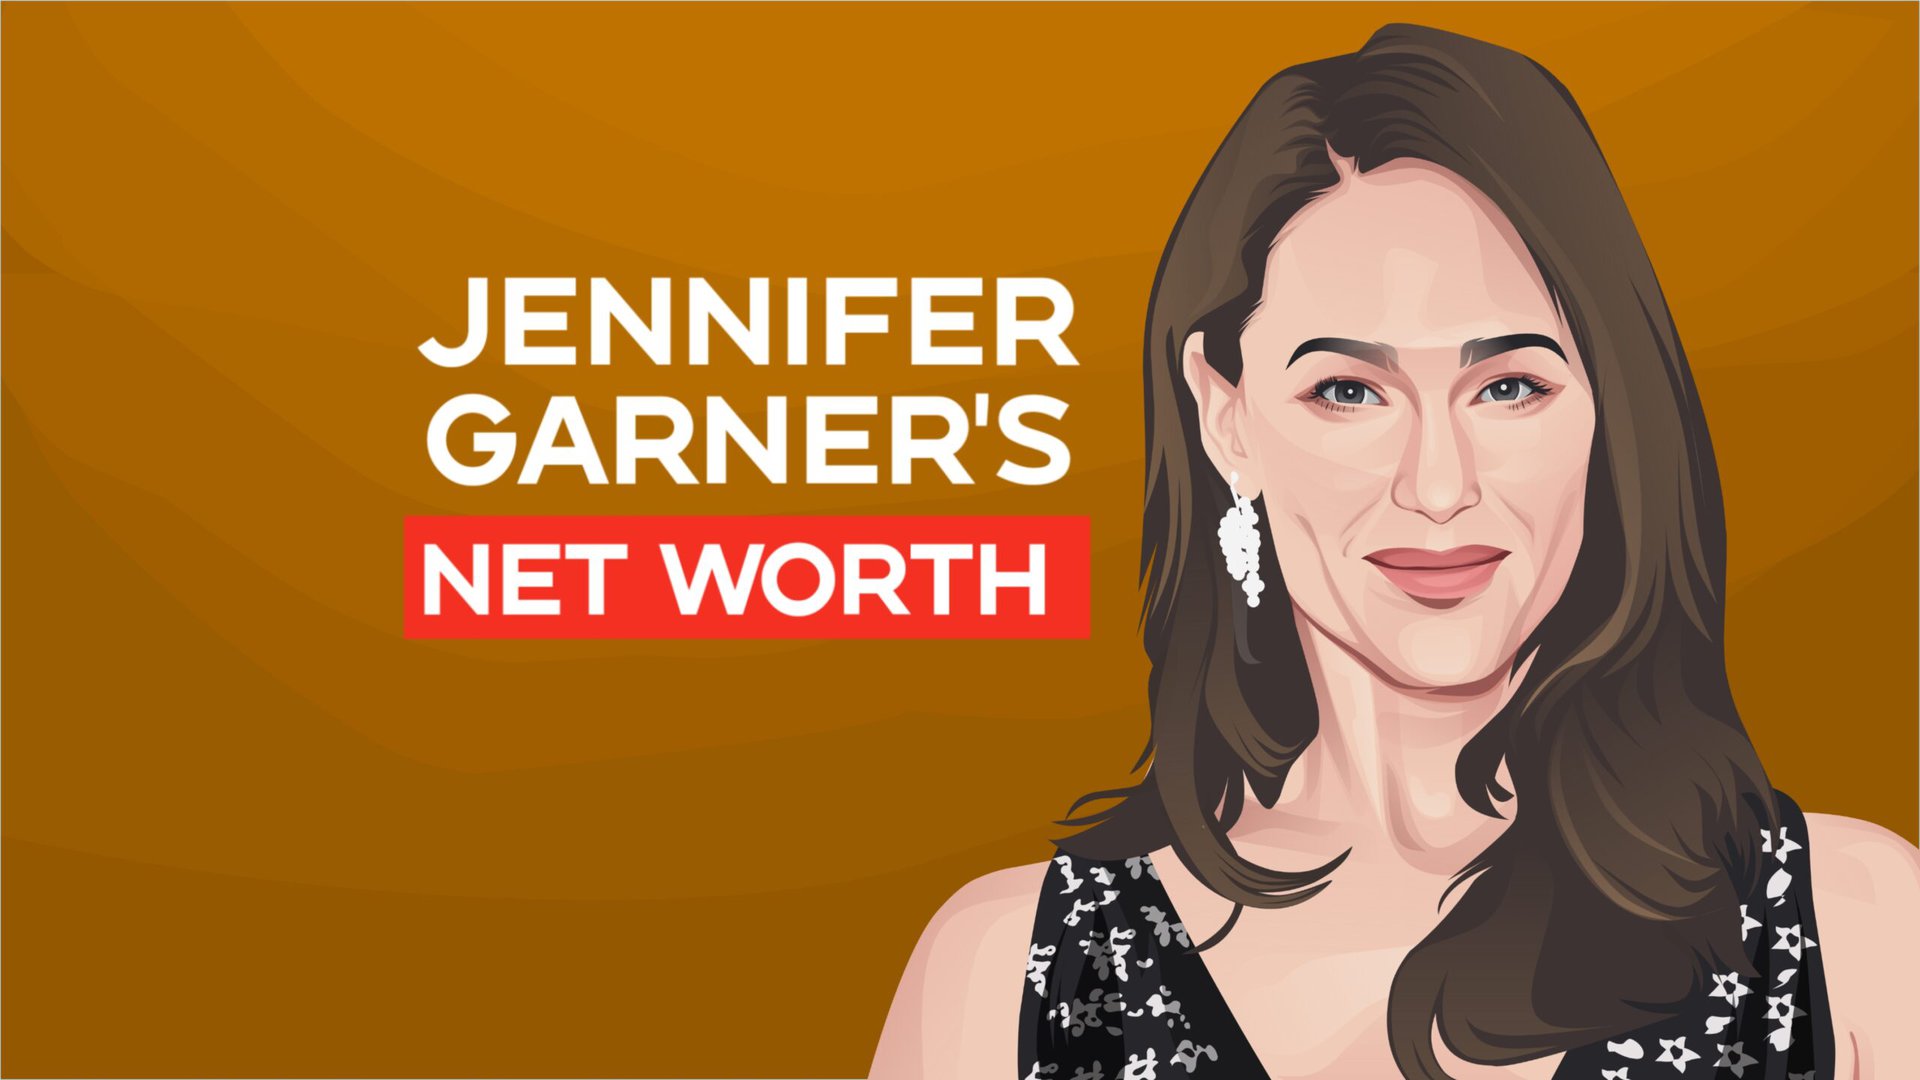 Jennifer Garner's net worth